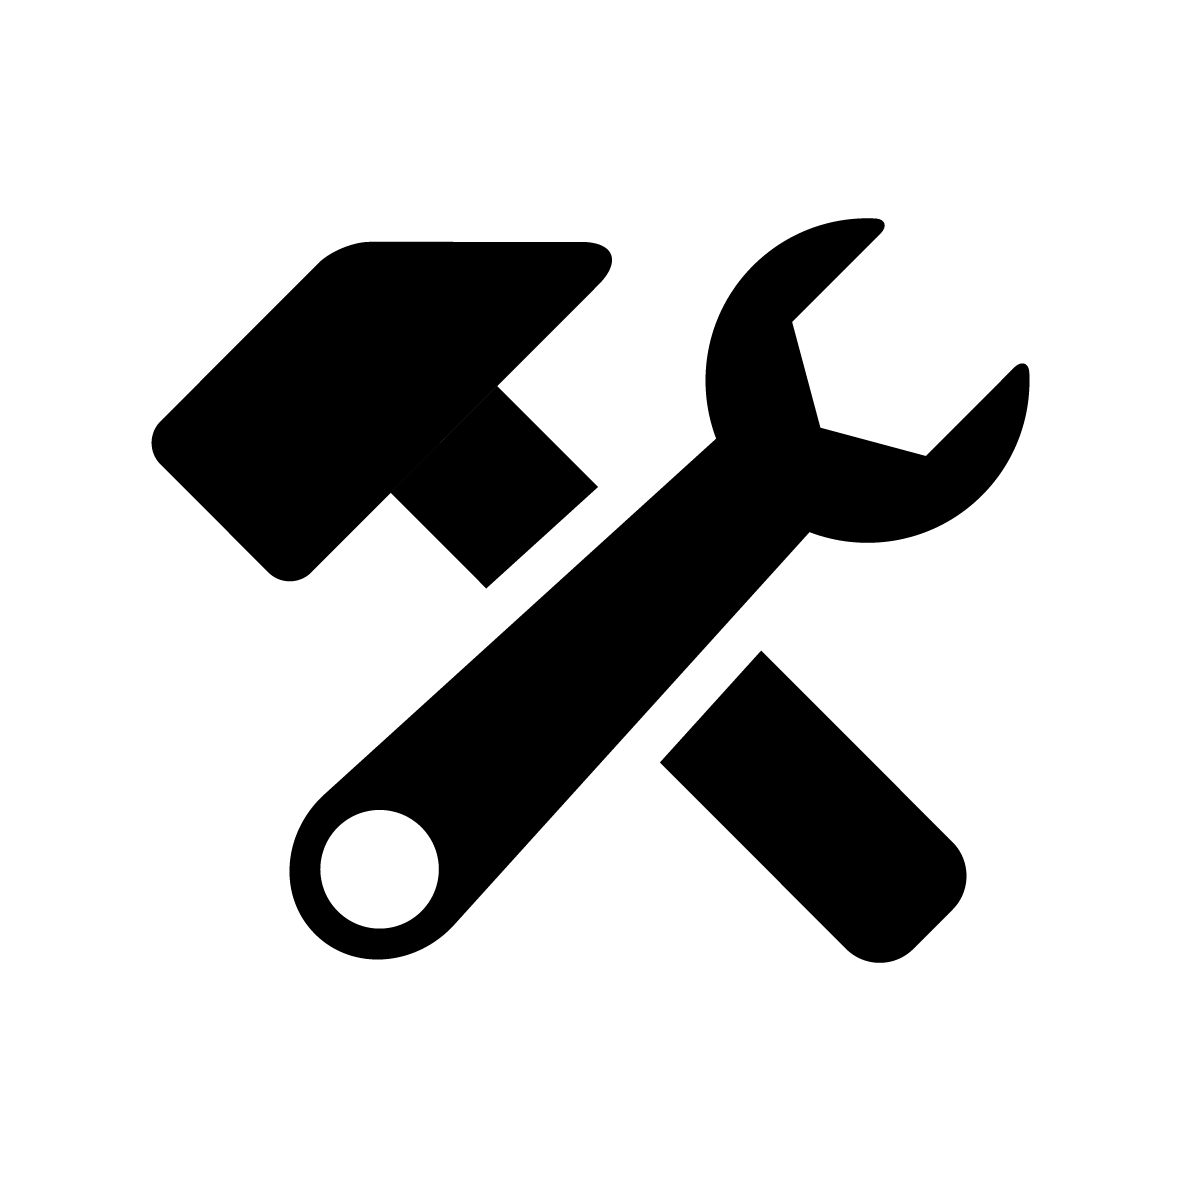 Temporary Works logo